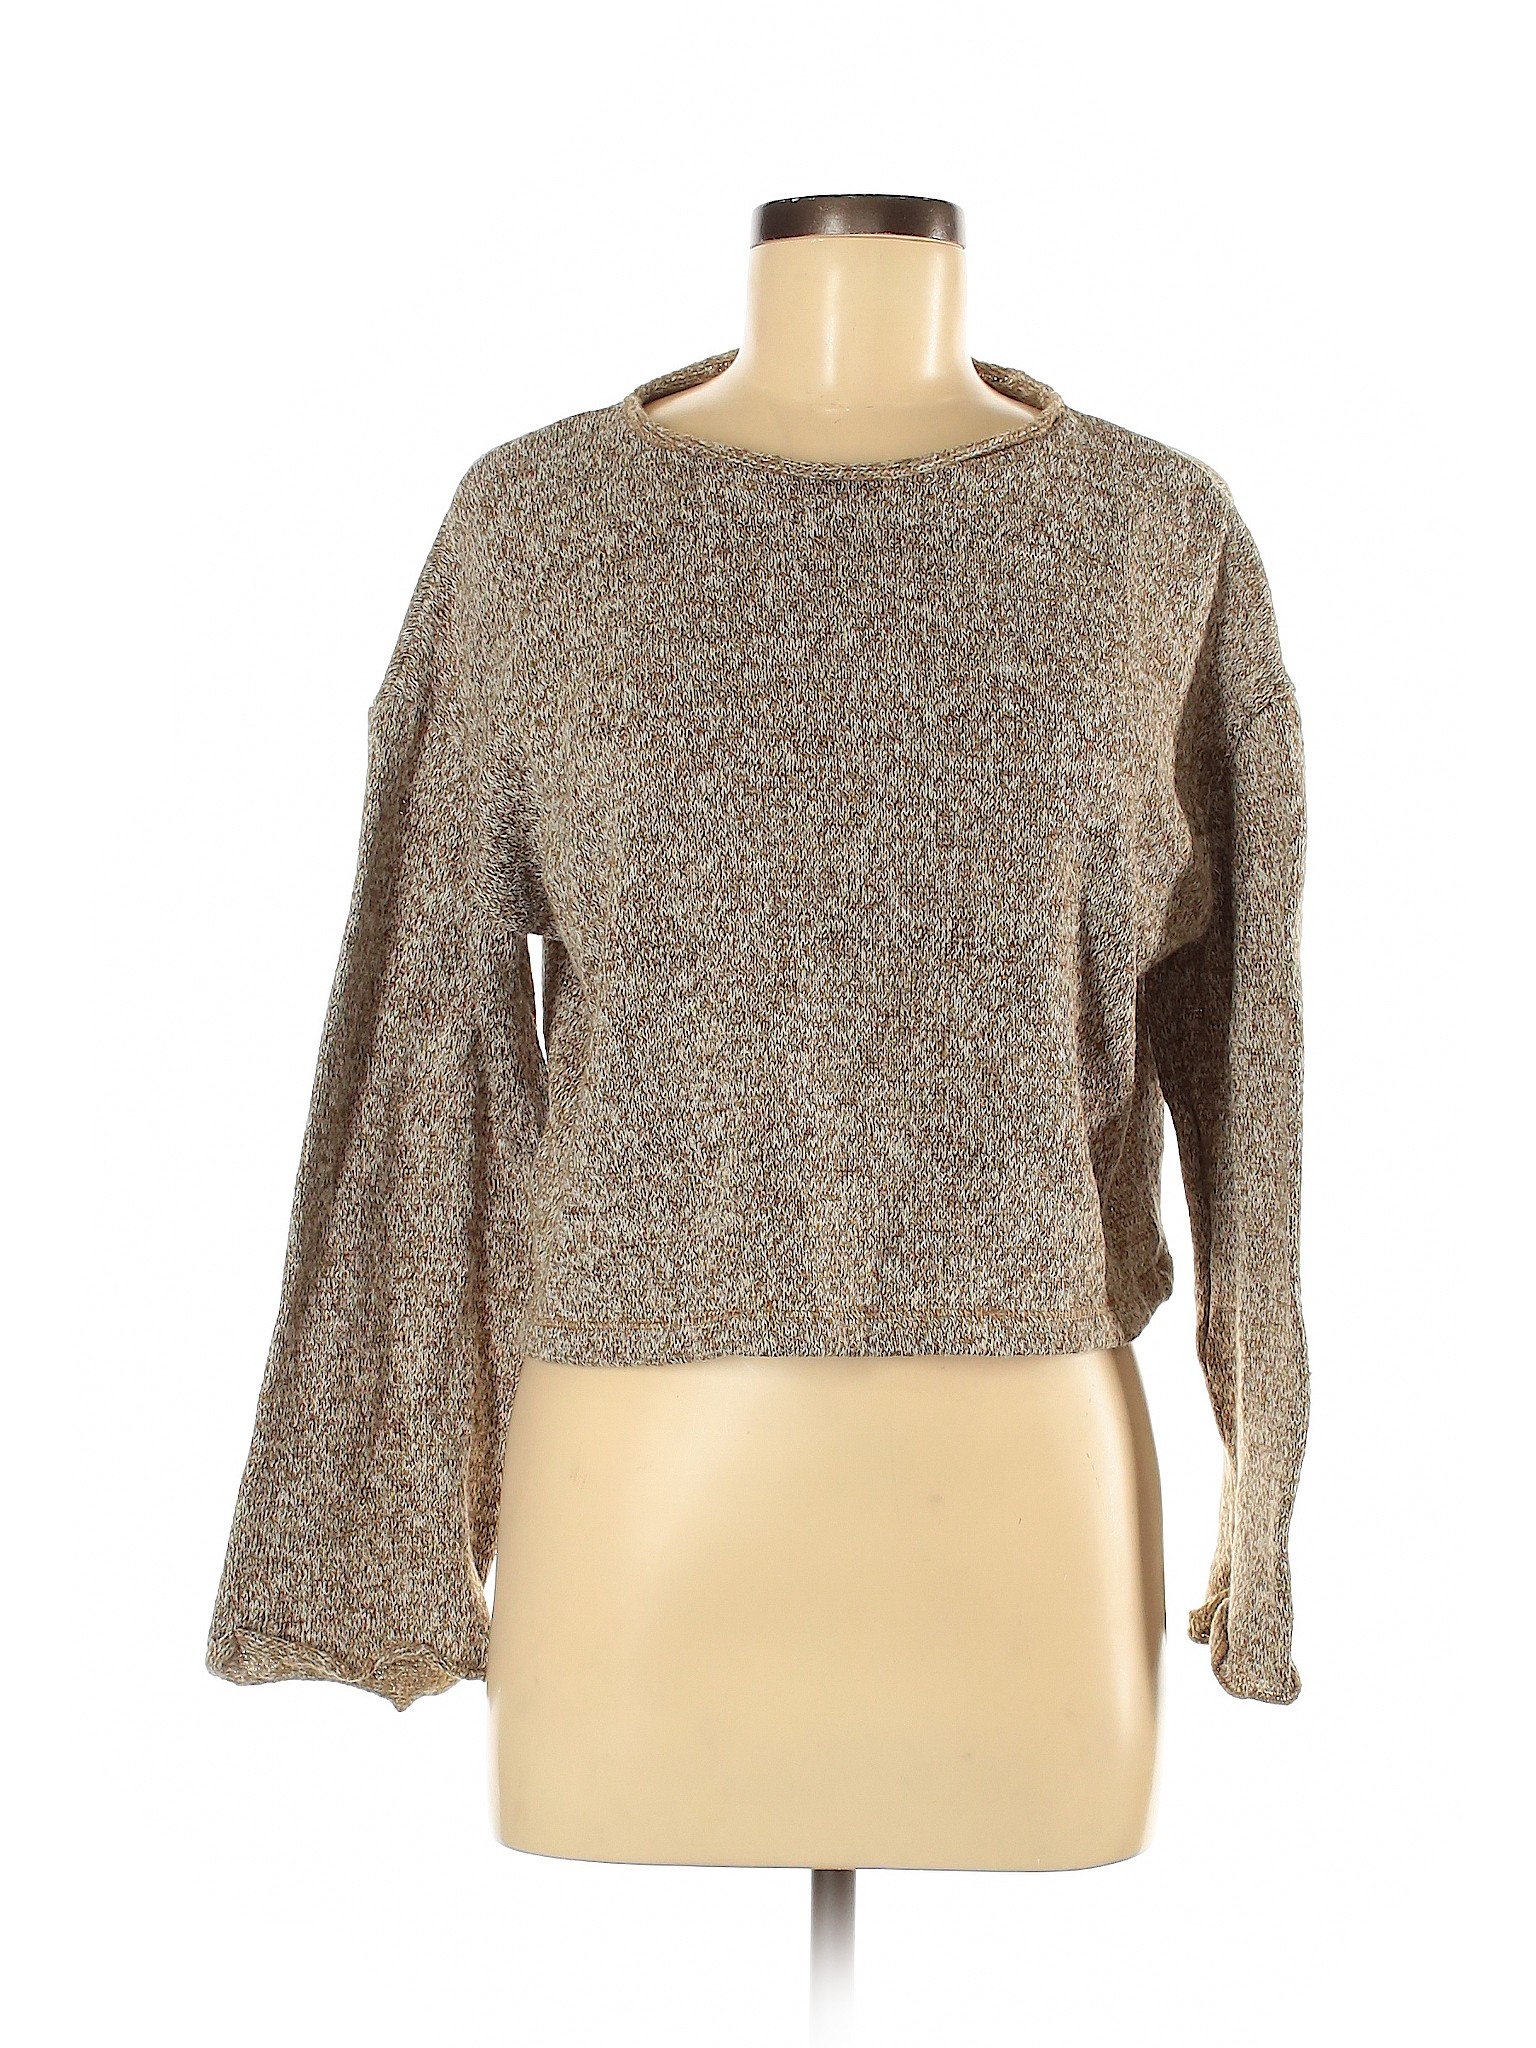 Zara Basic Women Brown Pullover Sweater L | eBay